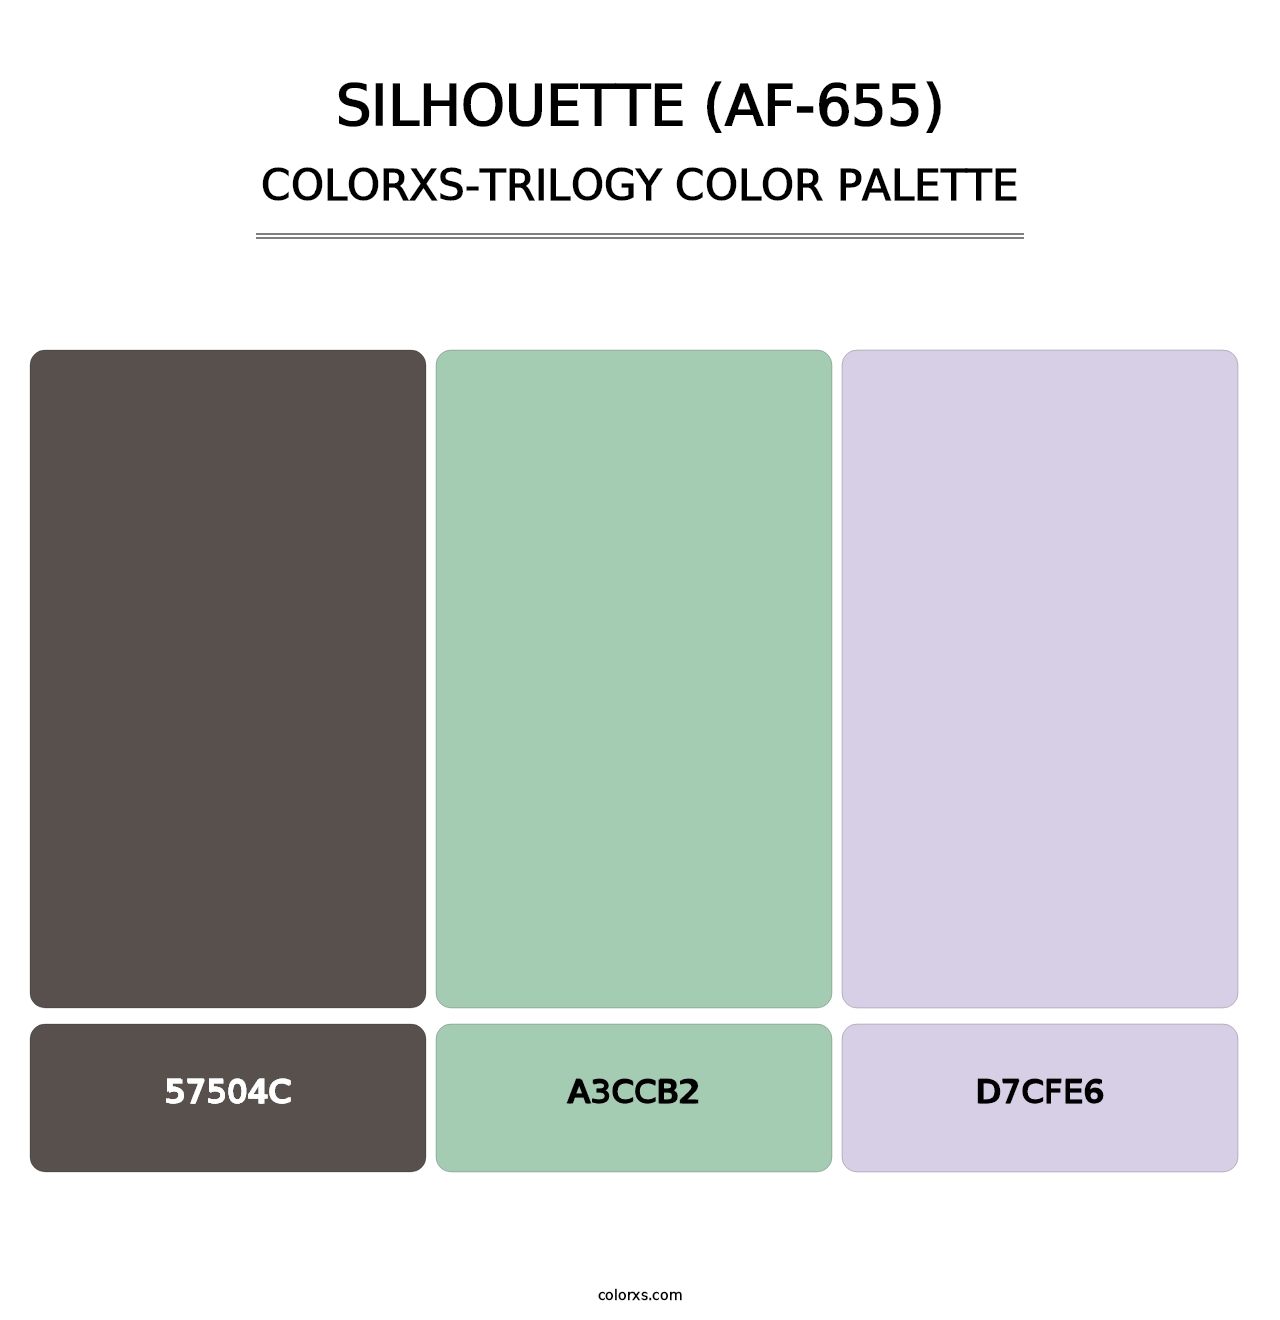 Silhouette (AF-655) - Colorxs Trilogy Palette